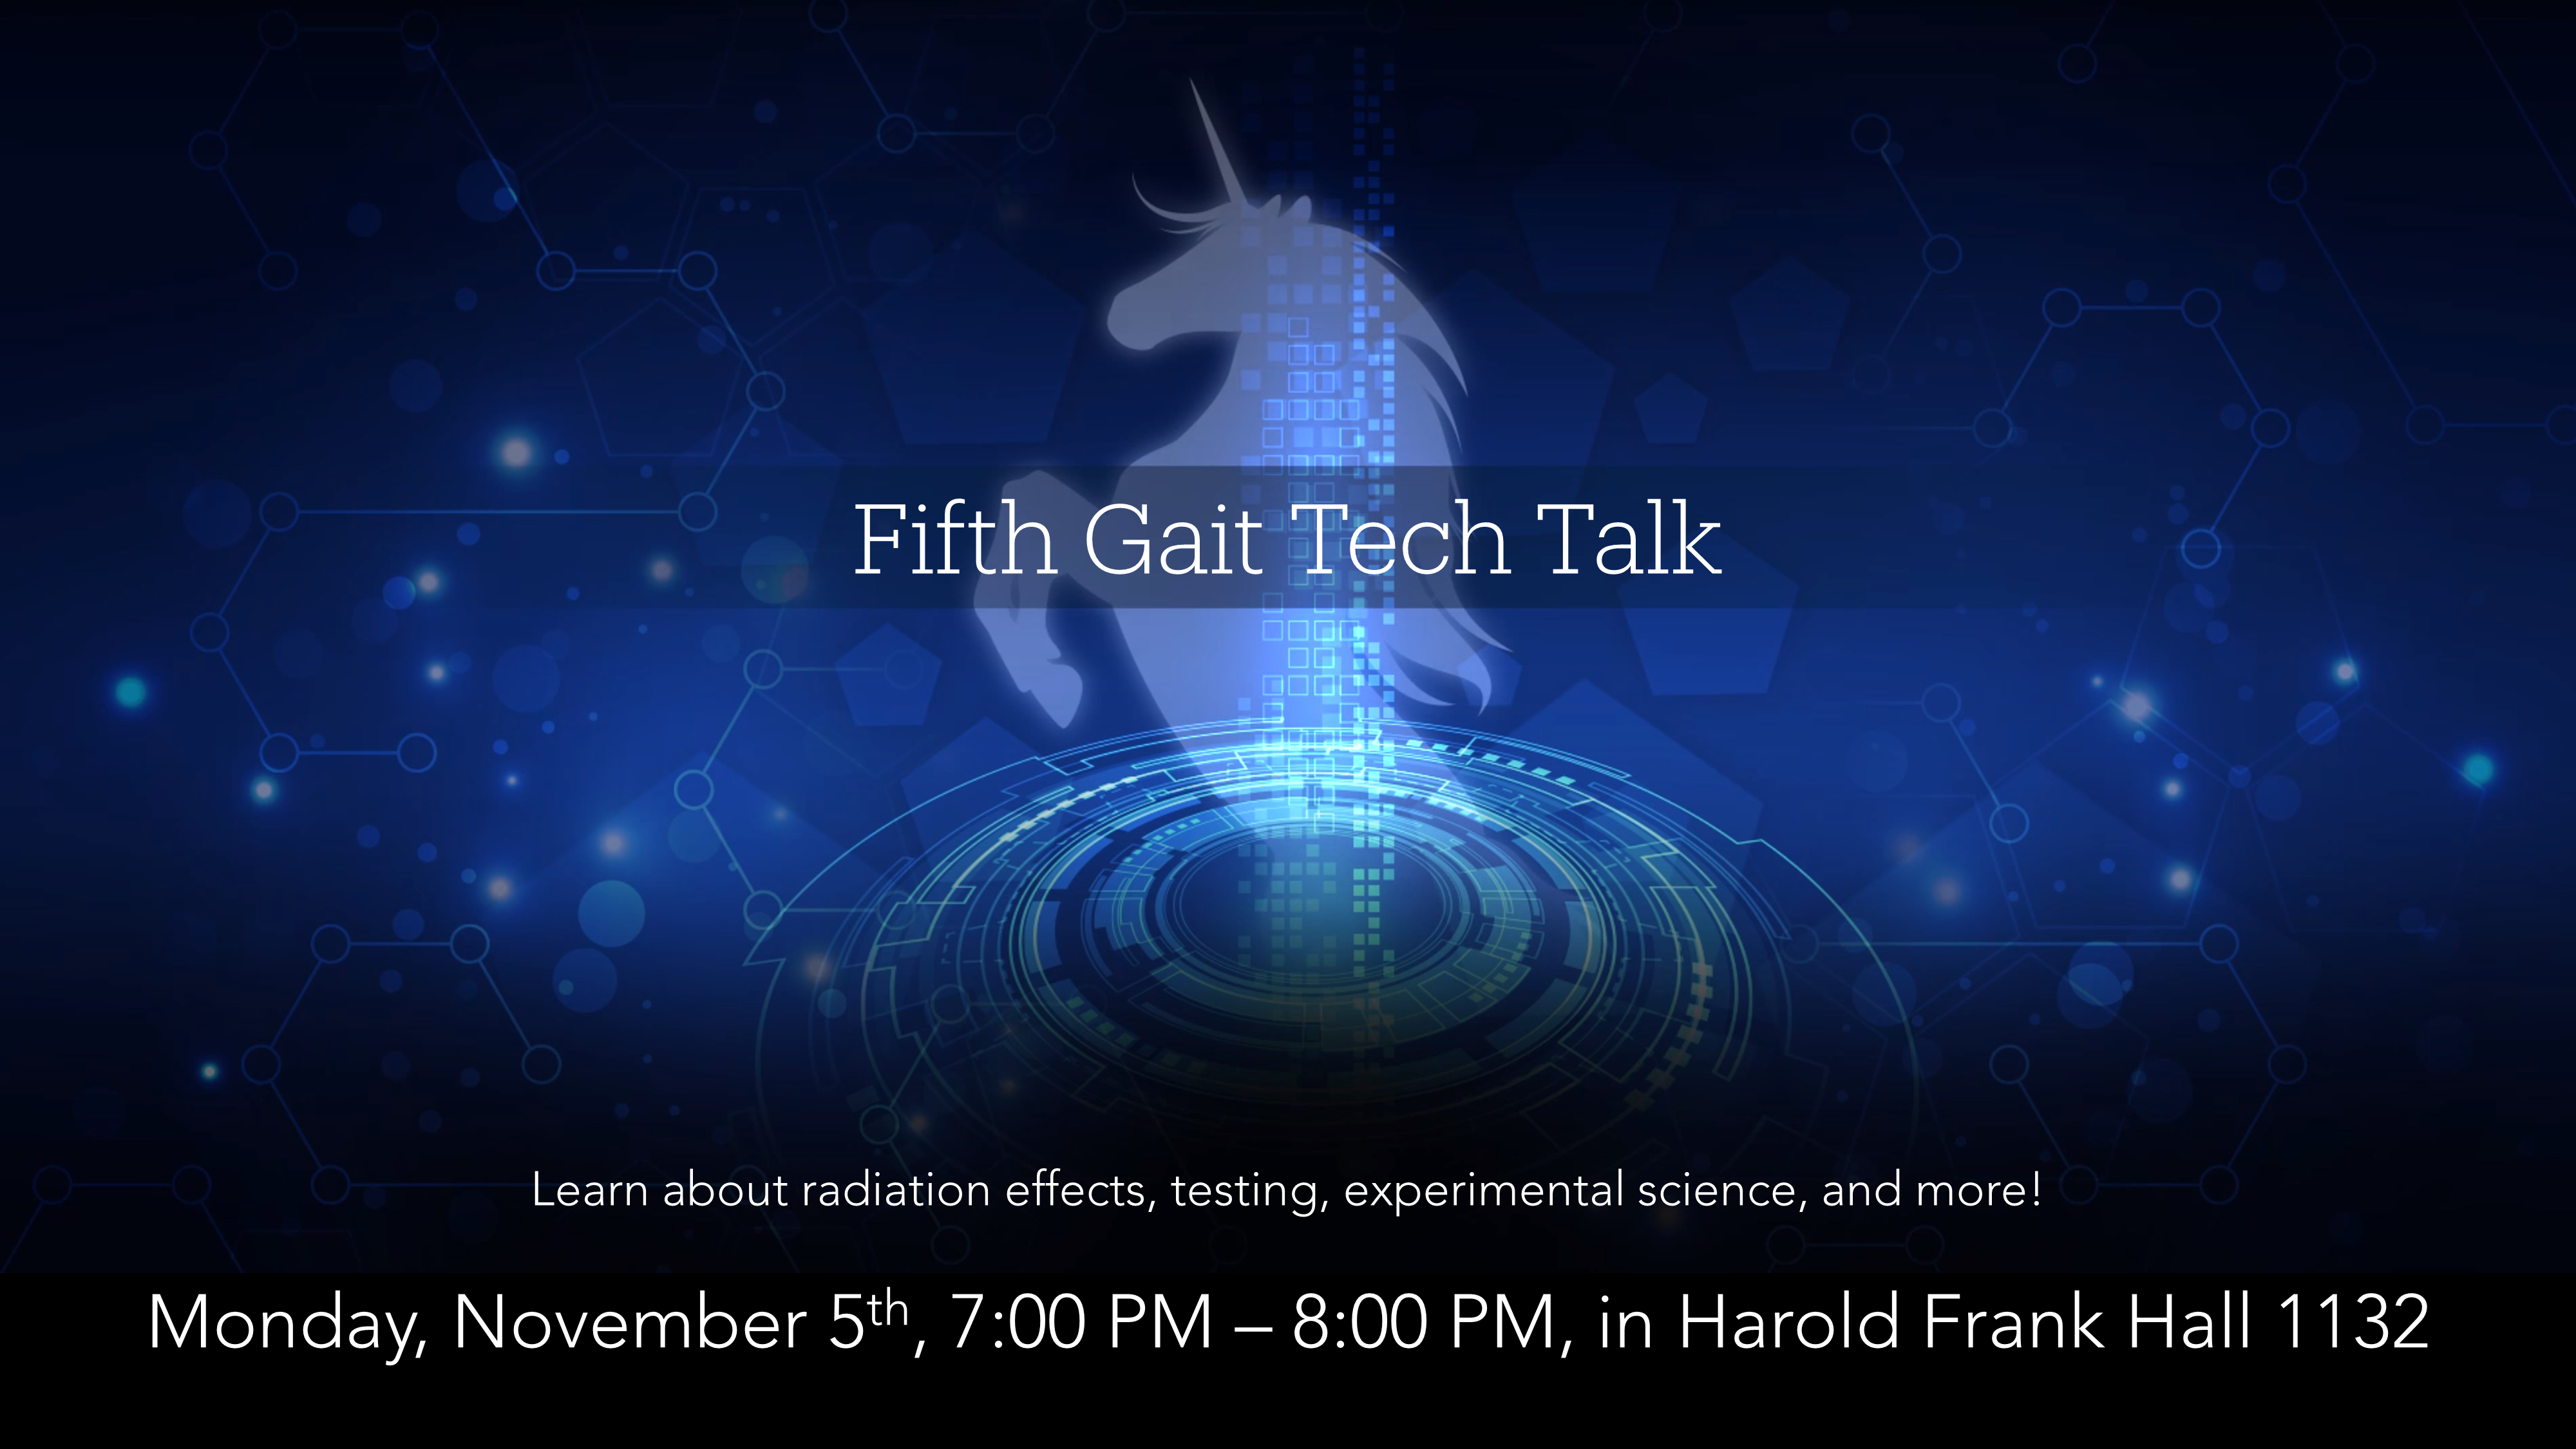 Fifth Gait Tech Talk